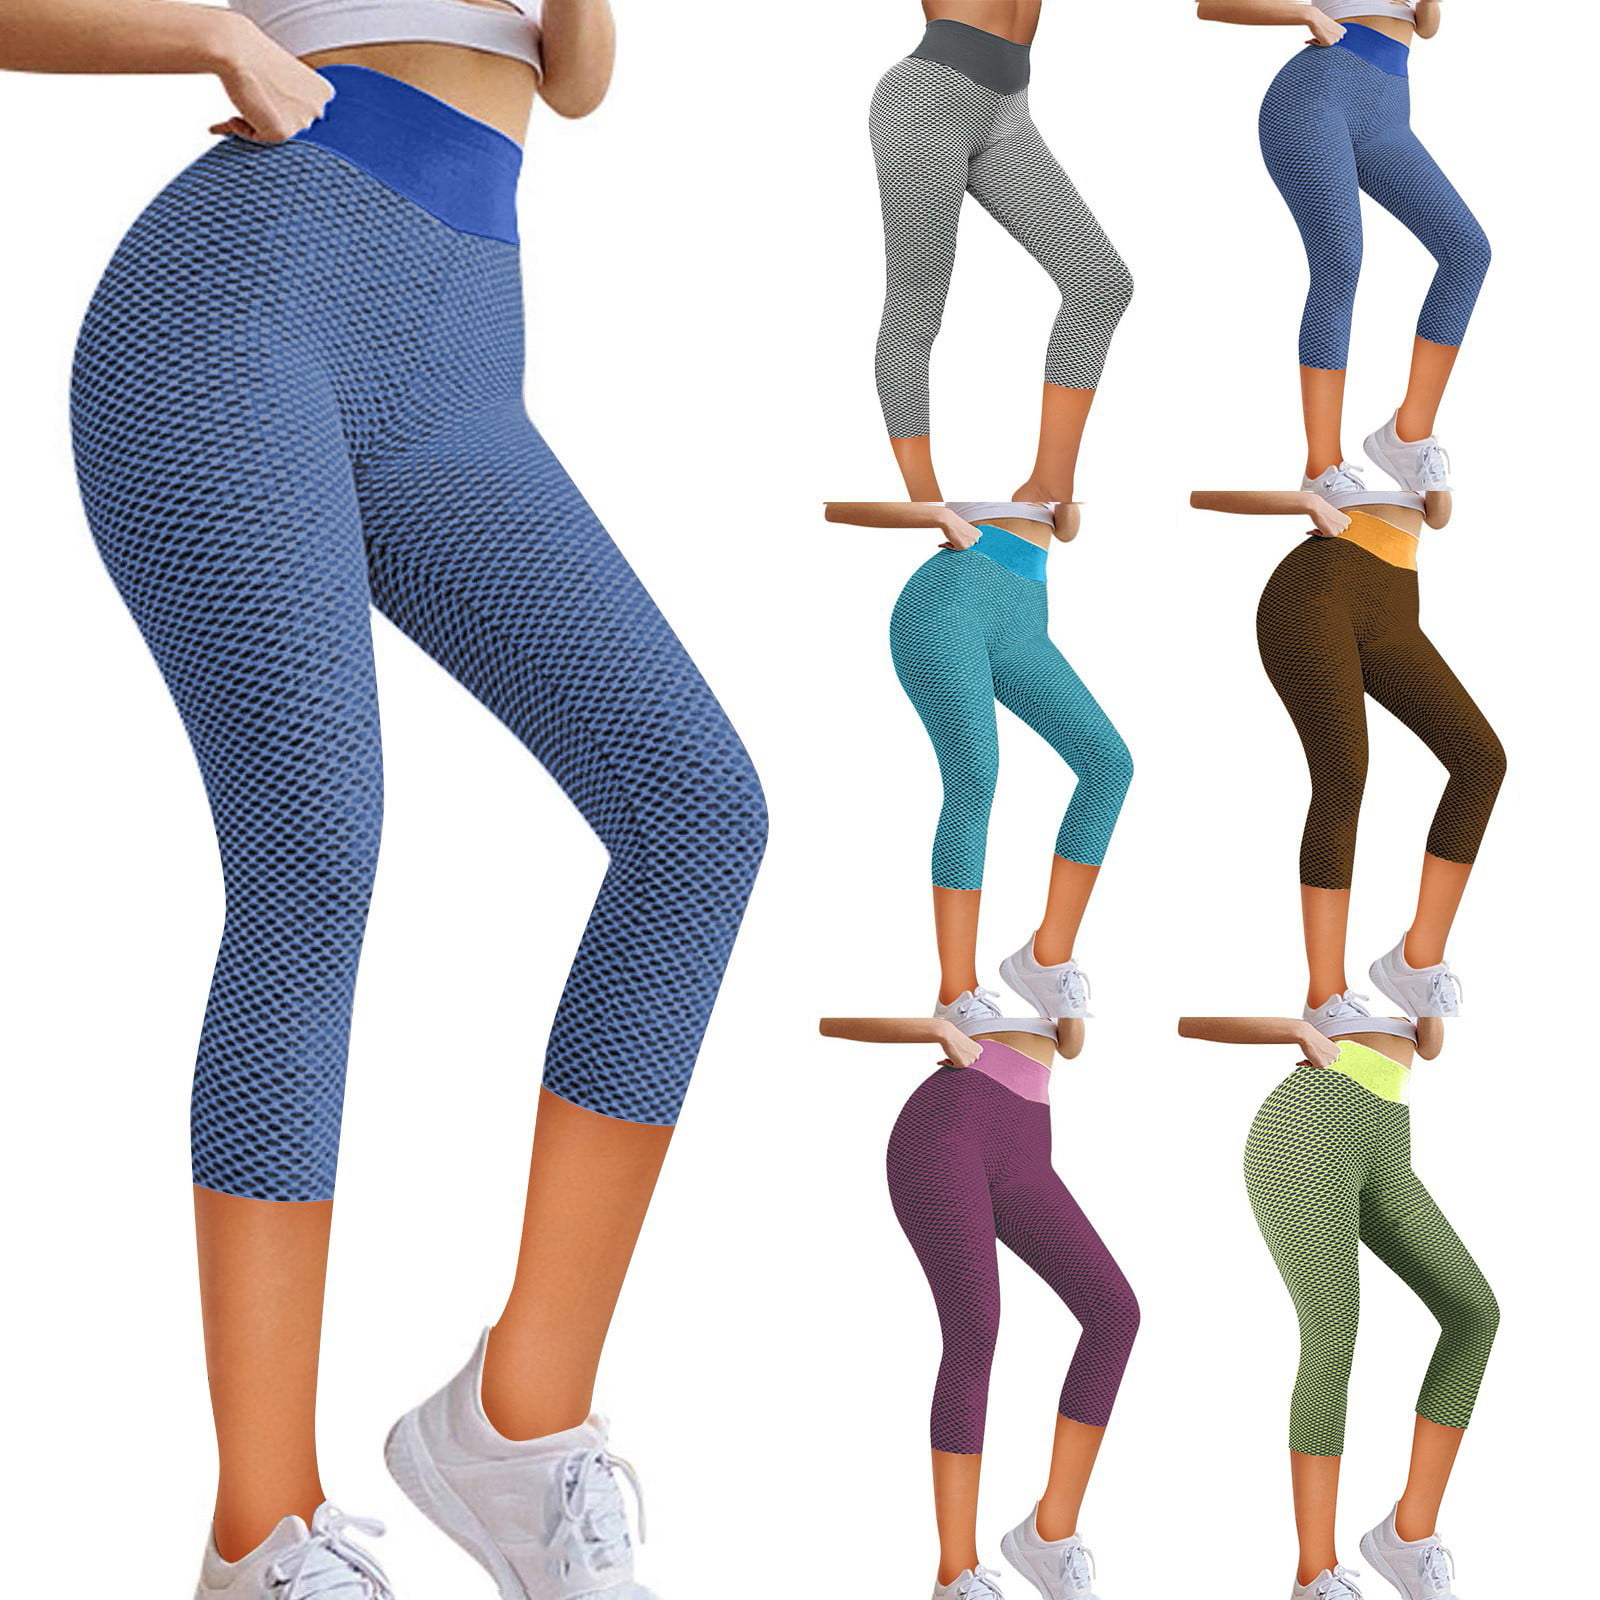 Women Lady Stretch Yoga Legging Fit Long Running Gym Sports Pocket Active Pants